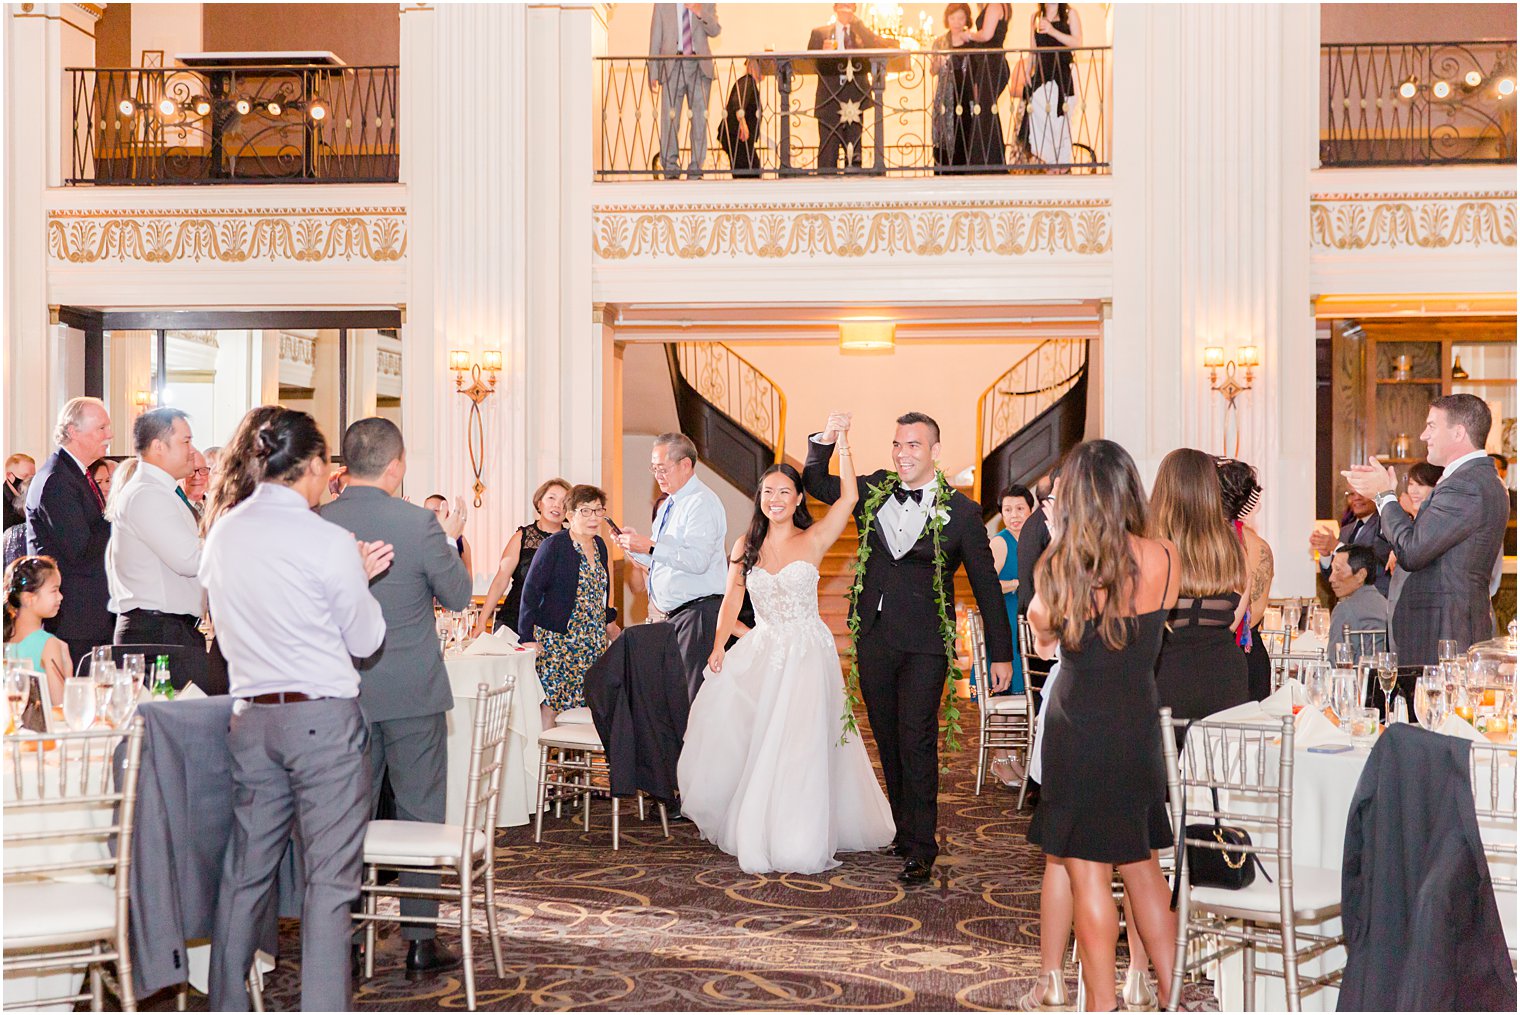 bride and groom walk into wedding reception waving to guests 